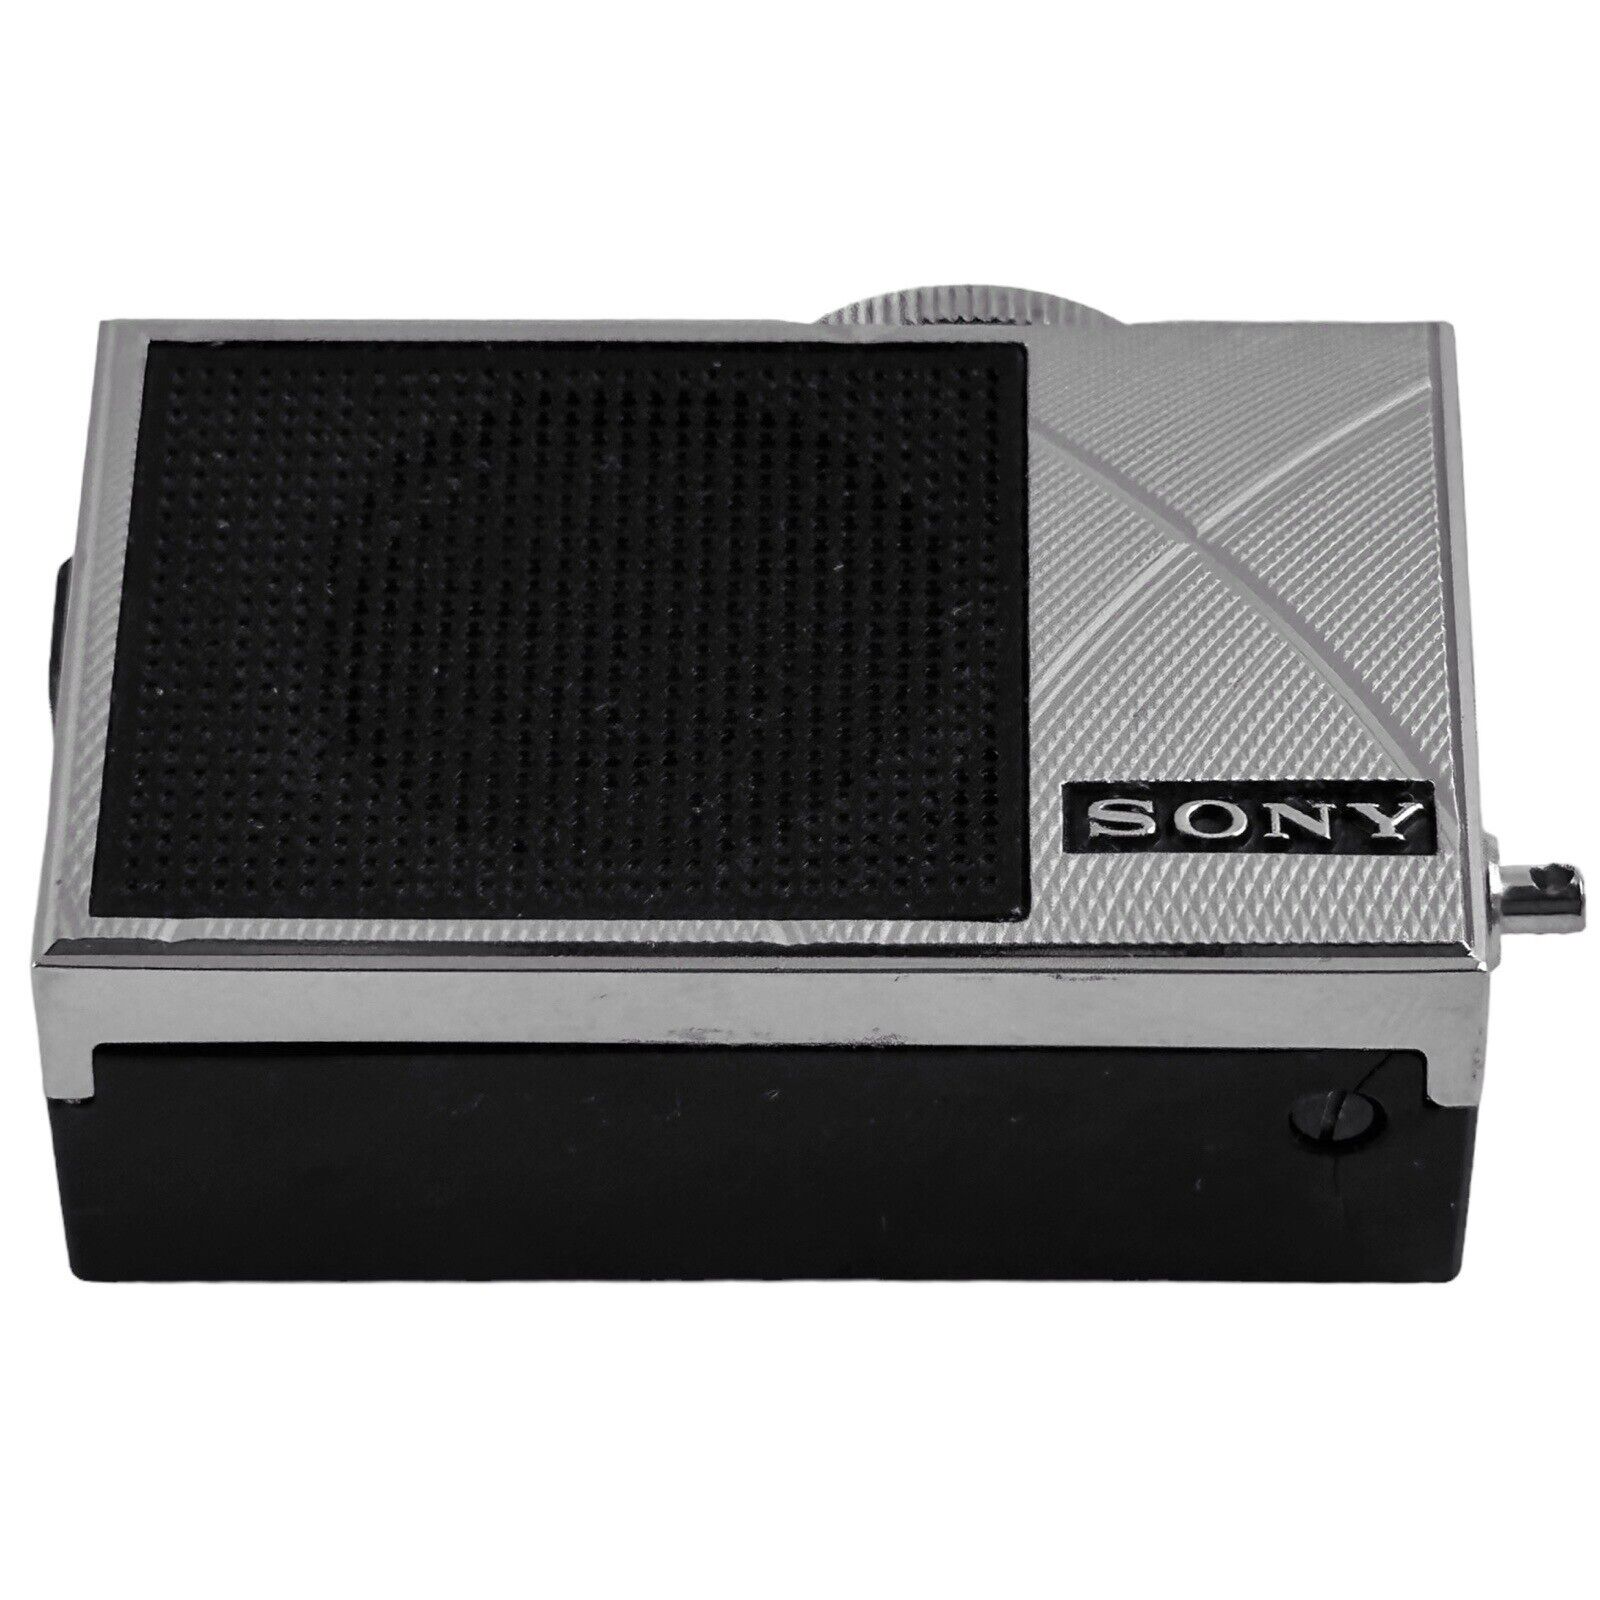 Sony ICR-120 Integrated Circuit Miniature Radio (WORKS)